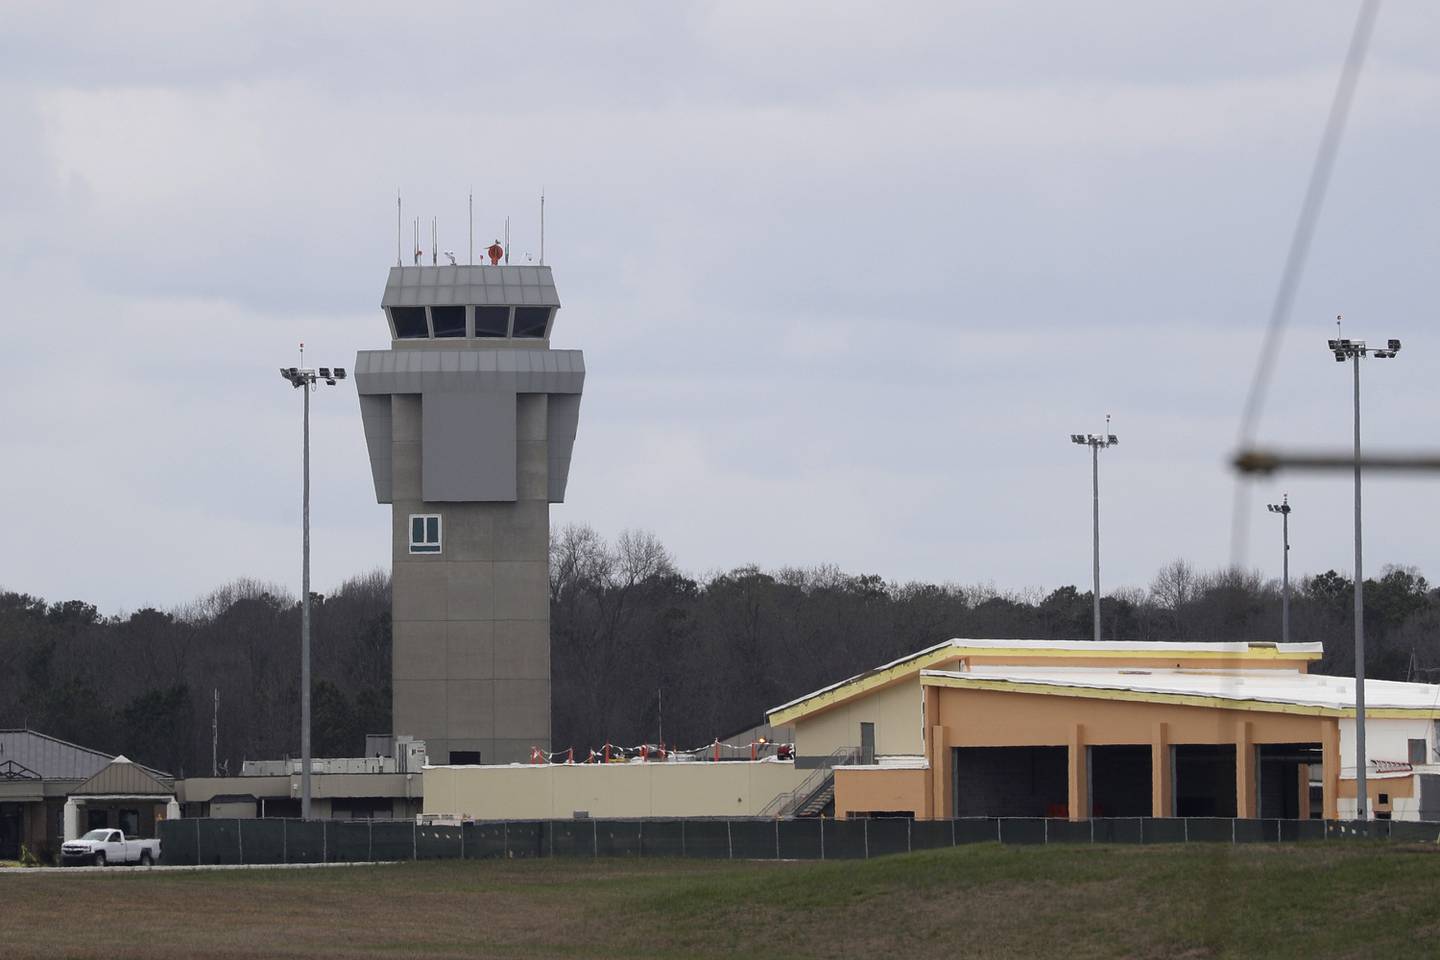 Dobbins Air Reserve Base